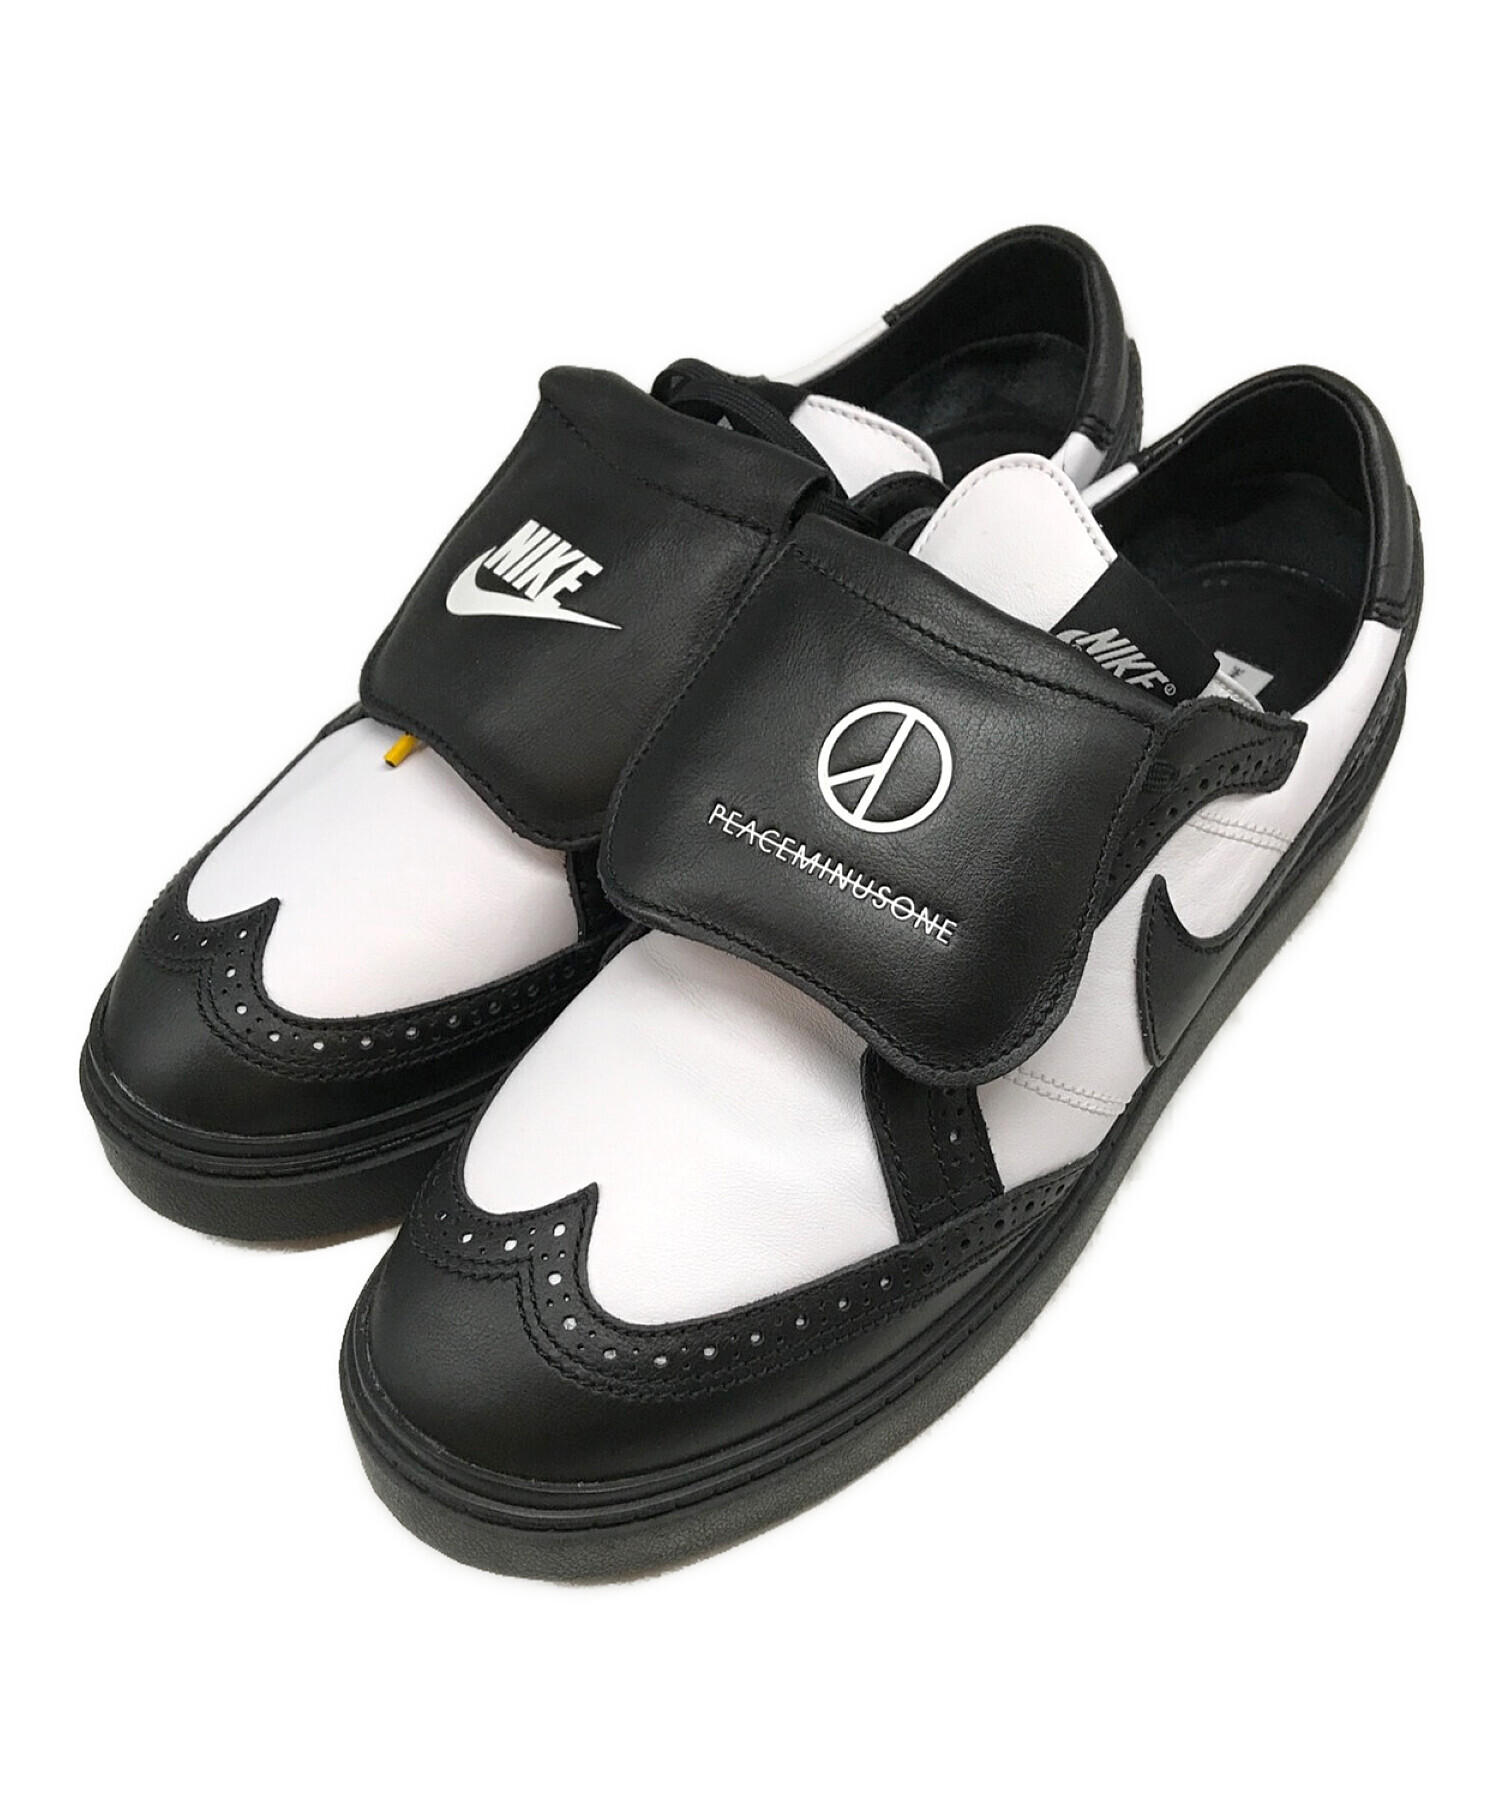 NIKE (ナイキ) PEACEMINUSONE (ピースマイナスワン) Nike x PEACEMINUSONE G-Dragon Kwondo 1  Black and White ブラック×ホワイト サイズ:29.0cm